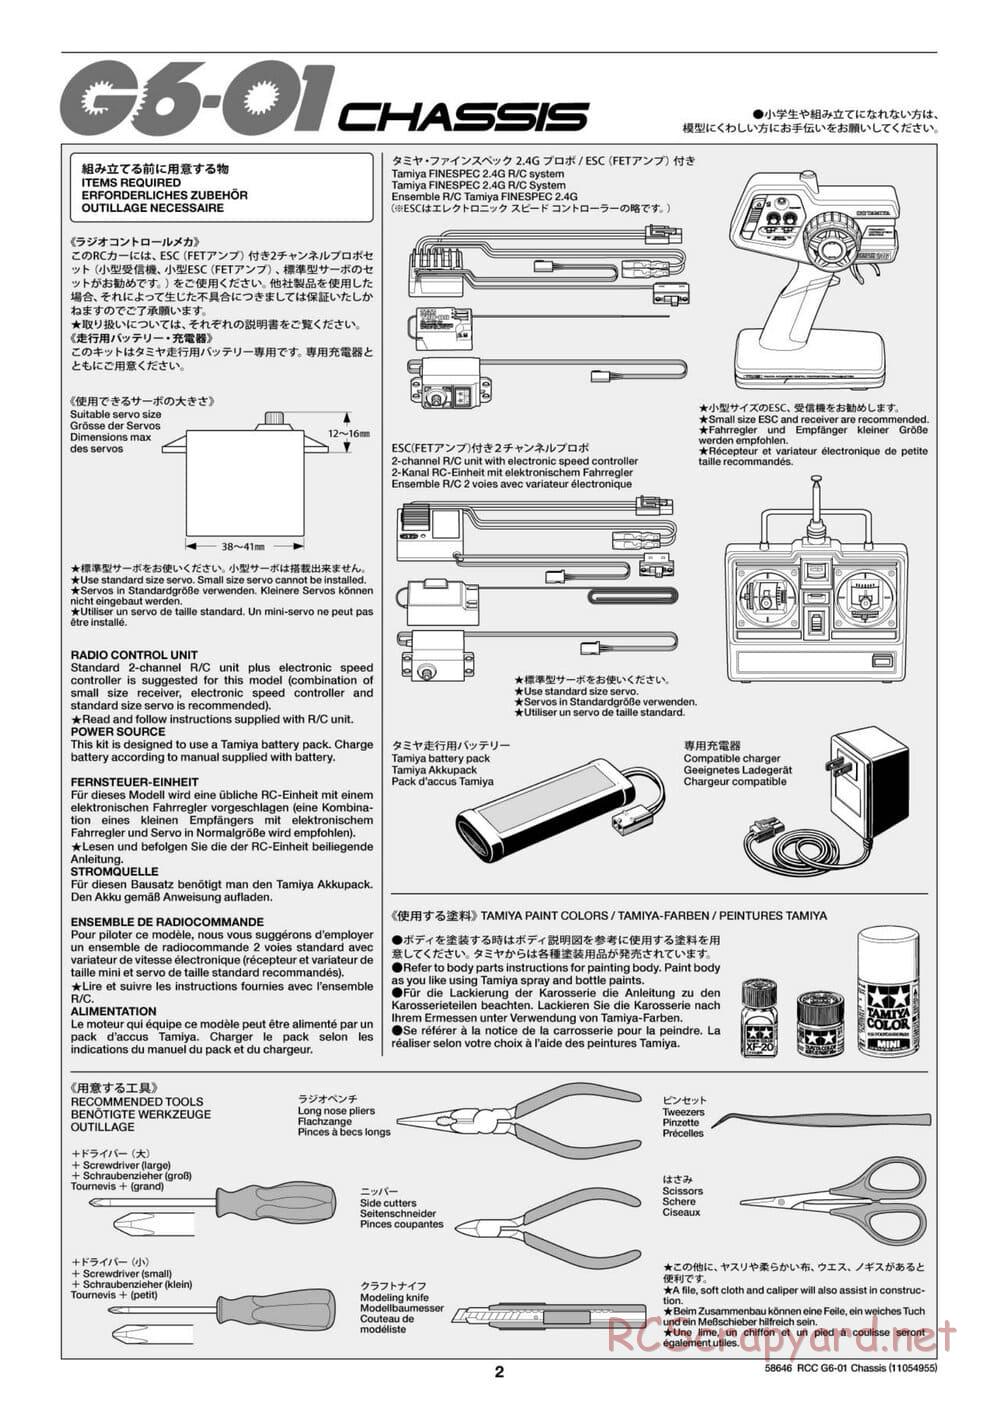 Tamiya - Konghead 6x6 - G6-01 Chassis - Manual - Page 2